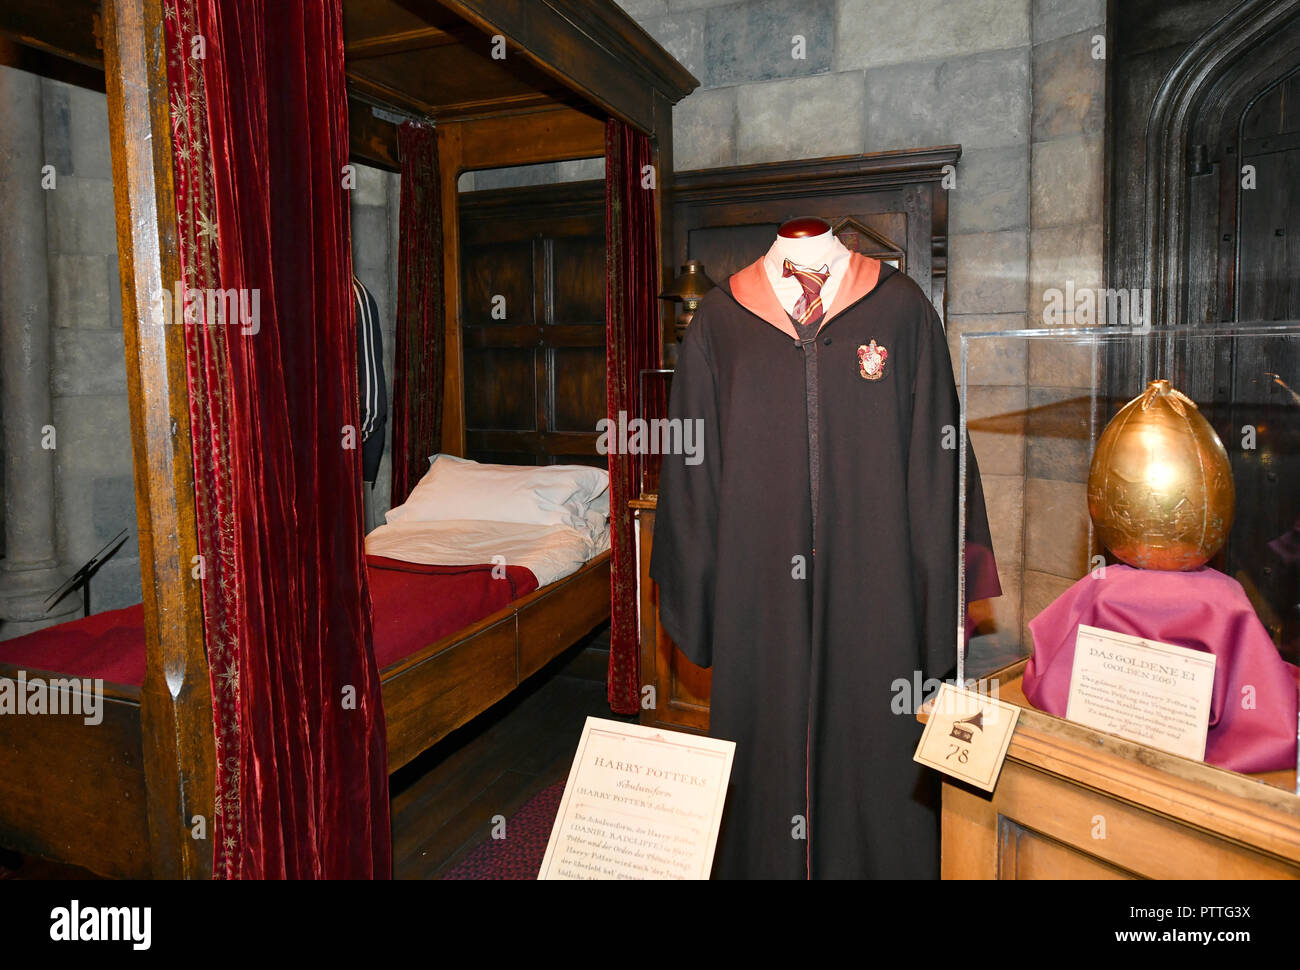 Potsdam Brandenburg 11th Oct 2018 Harry Potter S Boarding School Bed And School Uniform Are Shown In